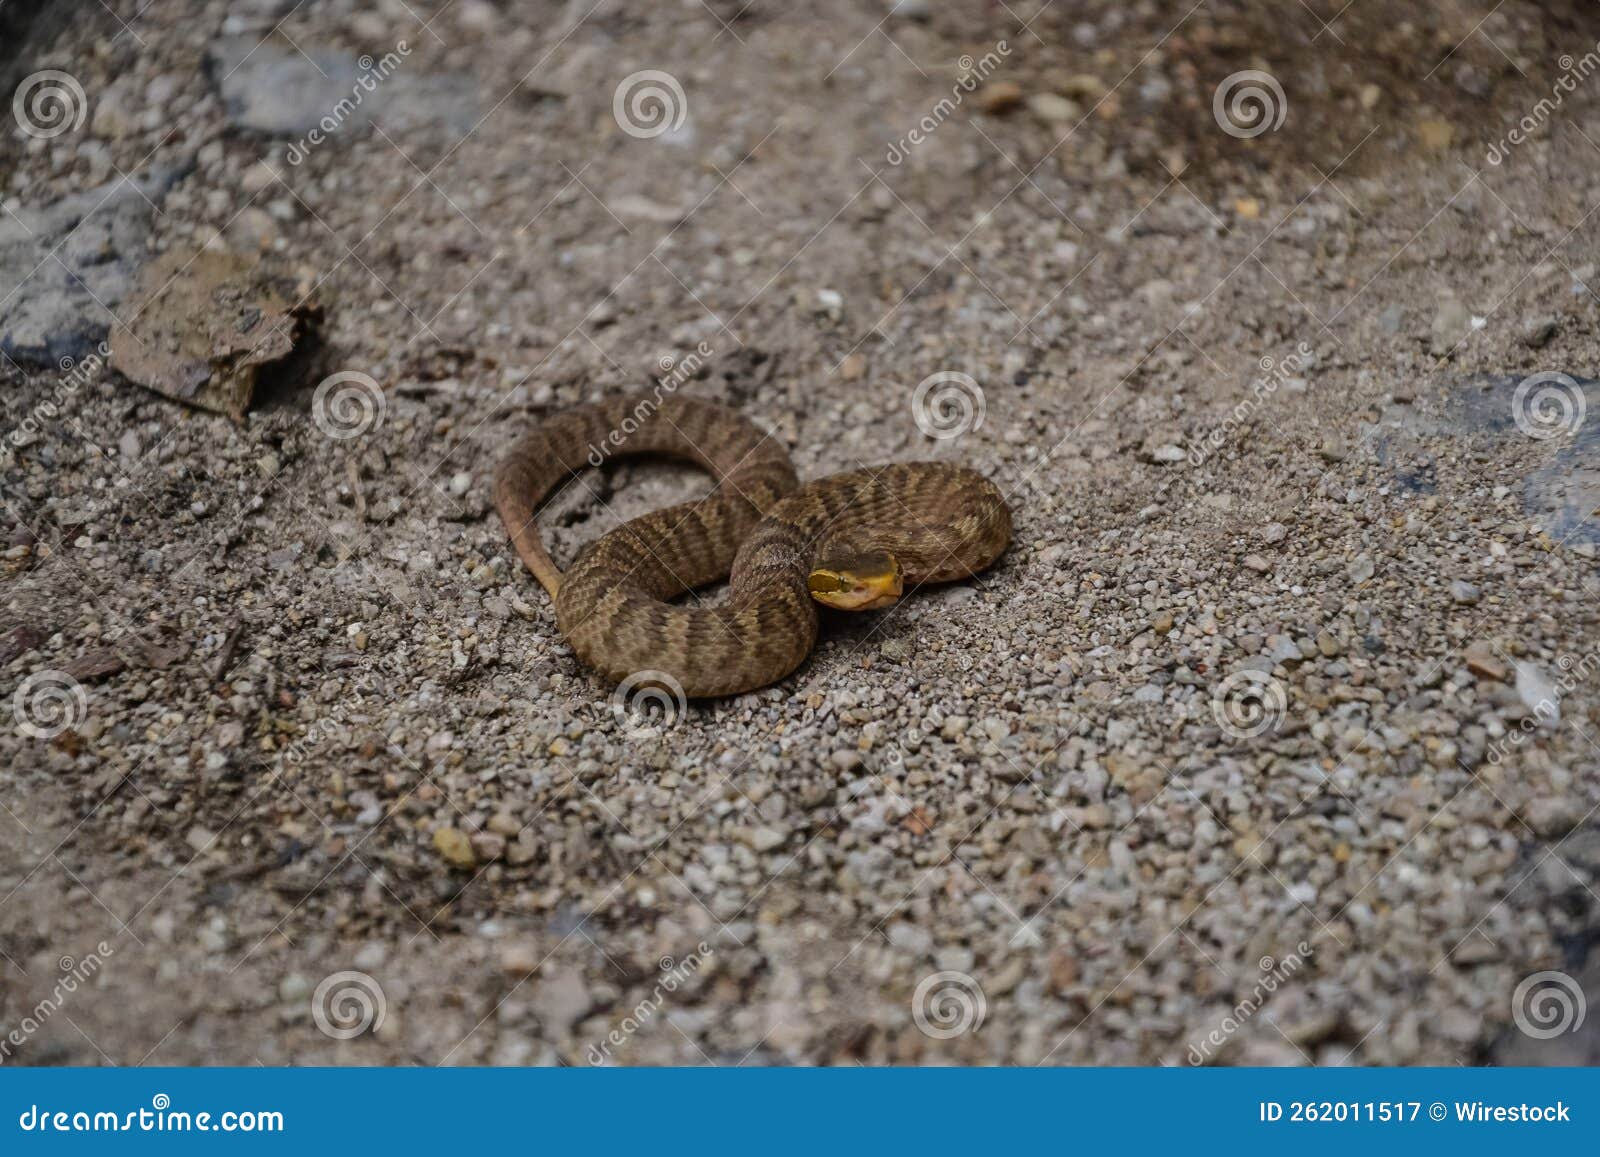 snake on the ground in byeonsan-bando national park, south korea.